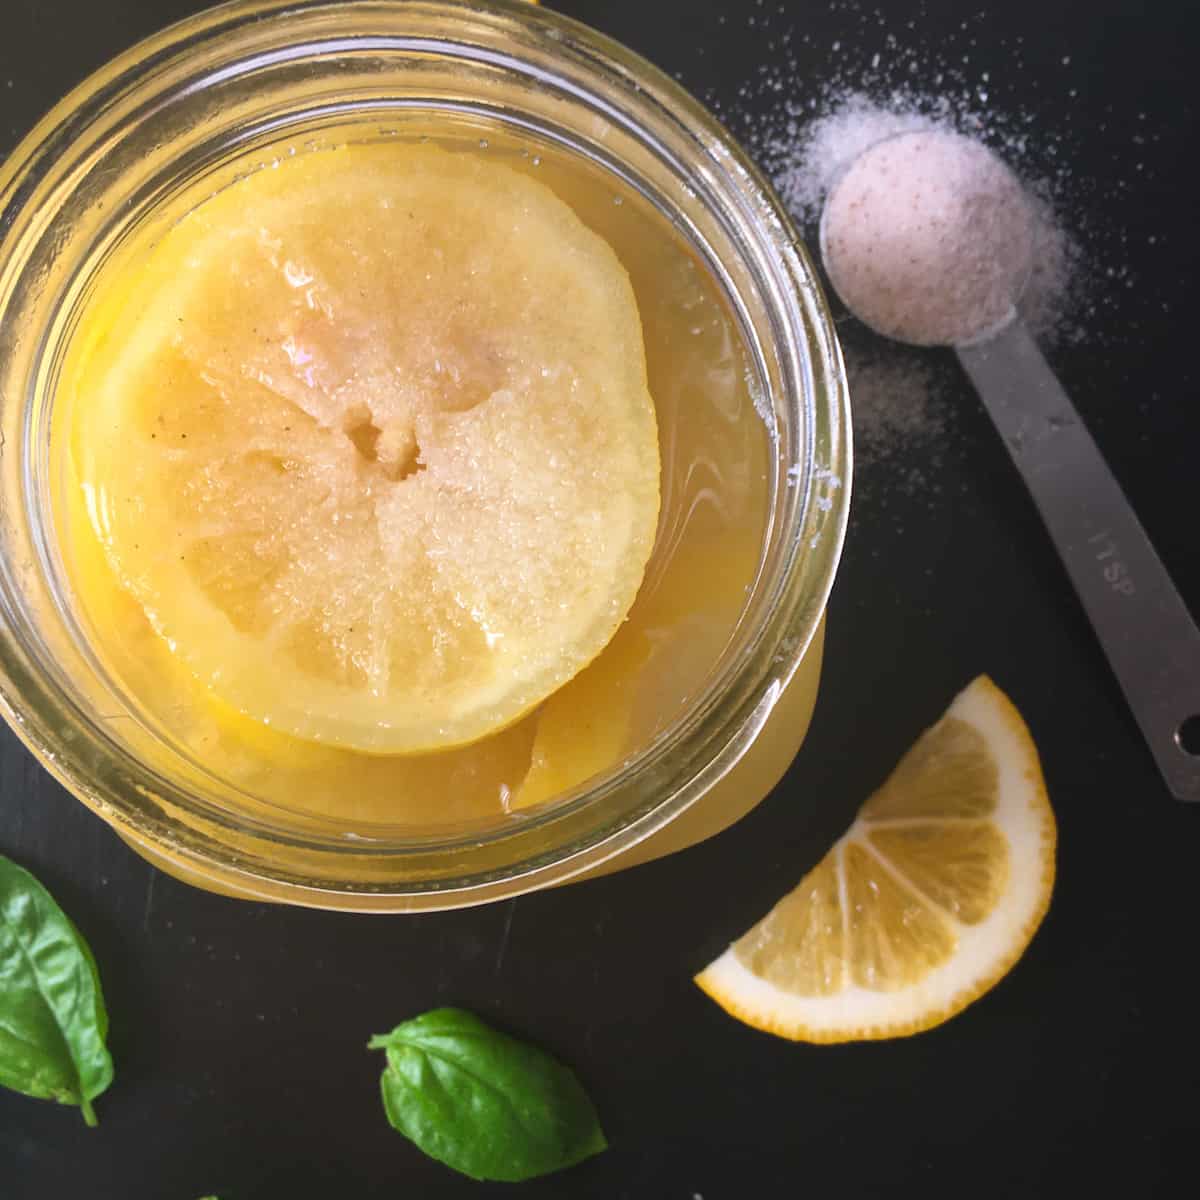 https://summeryule.com/wp-content/uploads/2021/04/fermented-lemons.jpeg